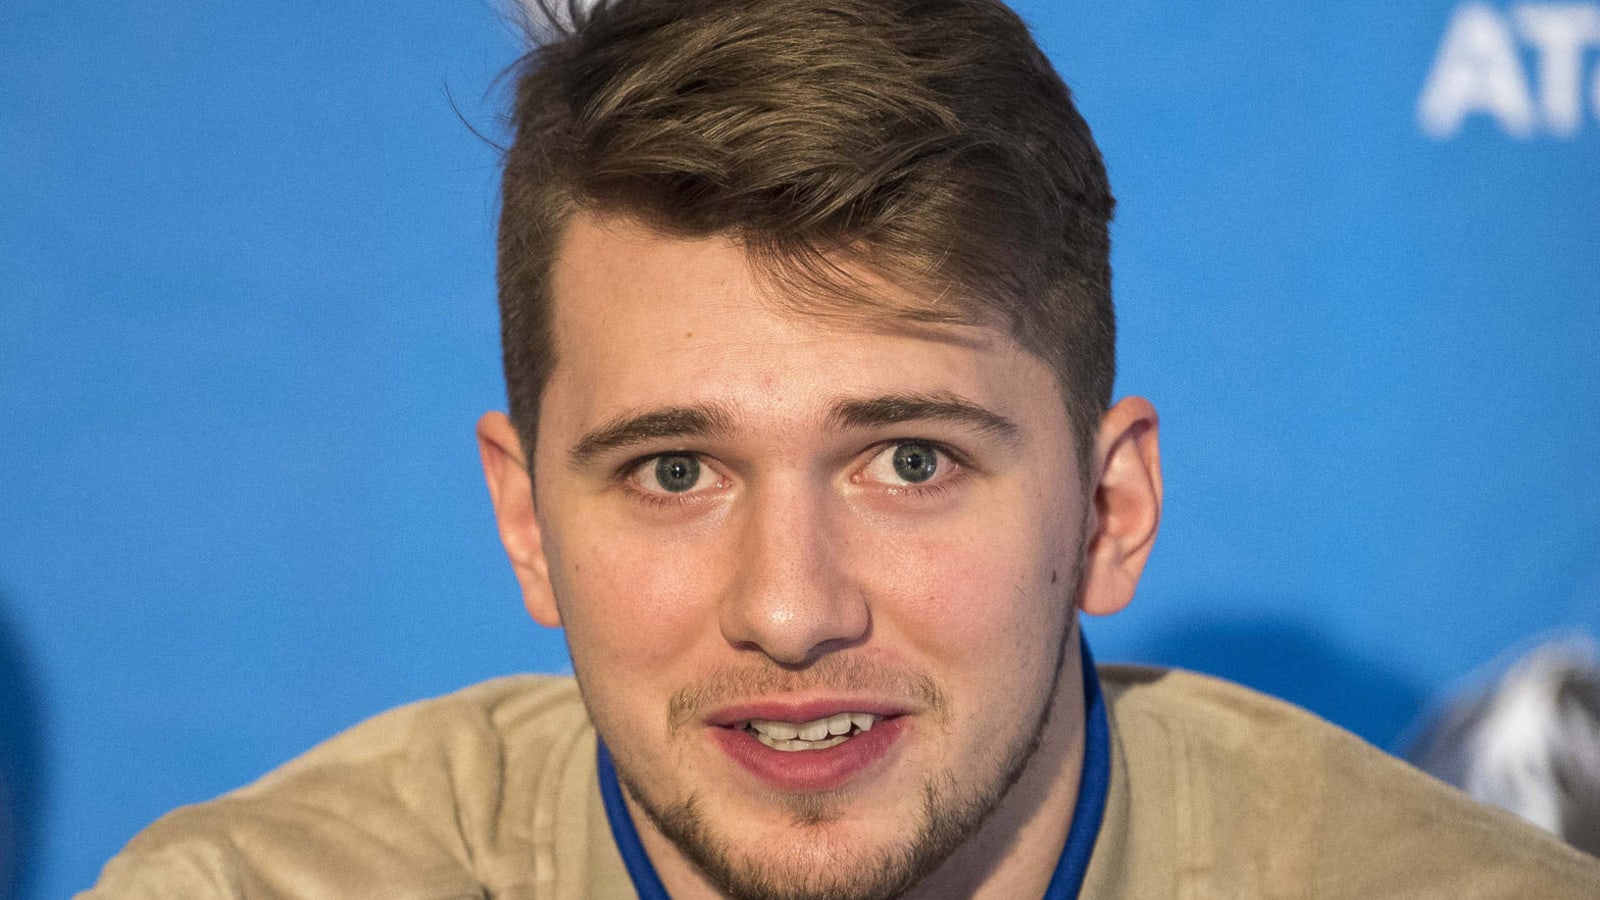 Luka Doncic won't play in FIBA qualifiers, preparing for NBA season